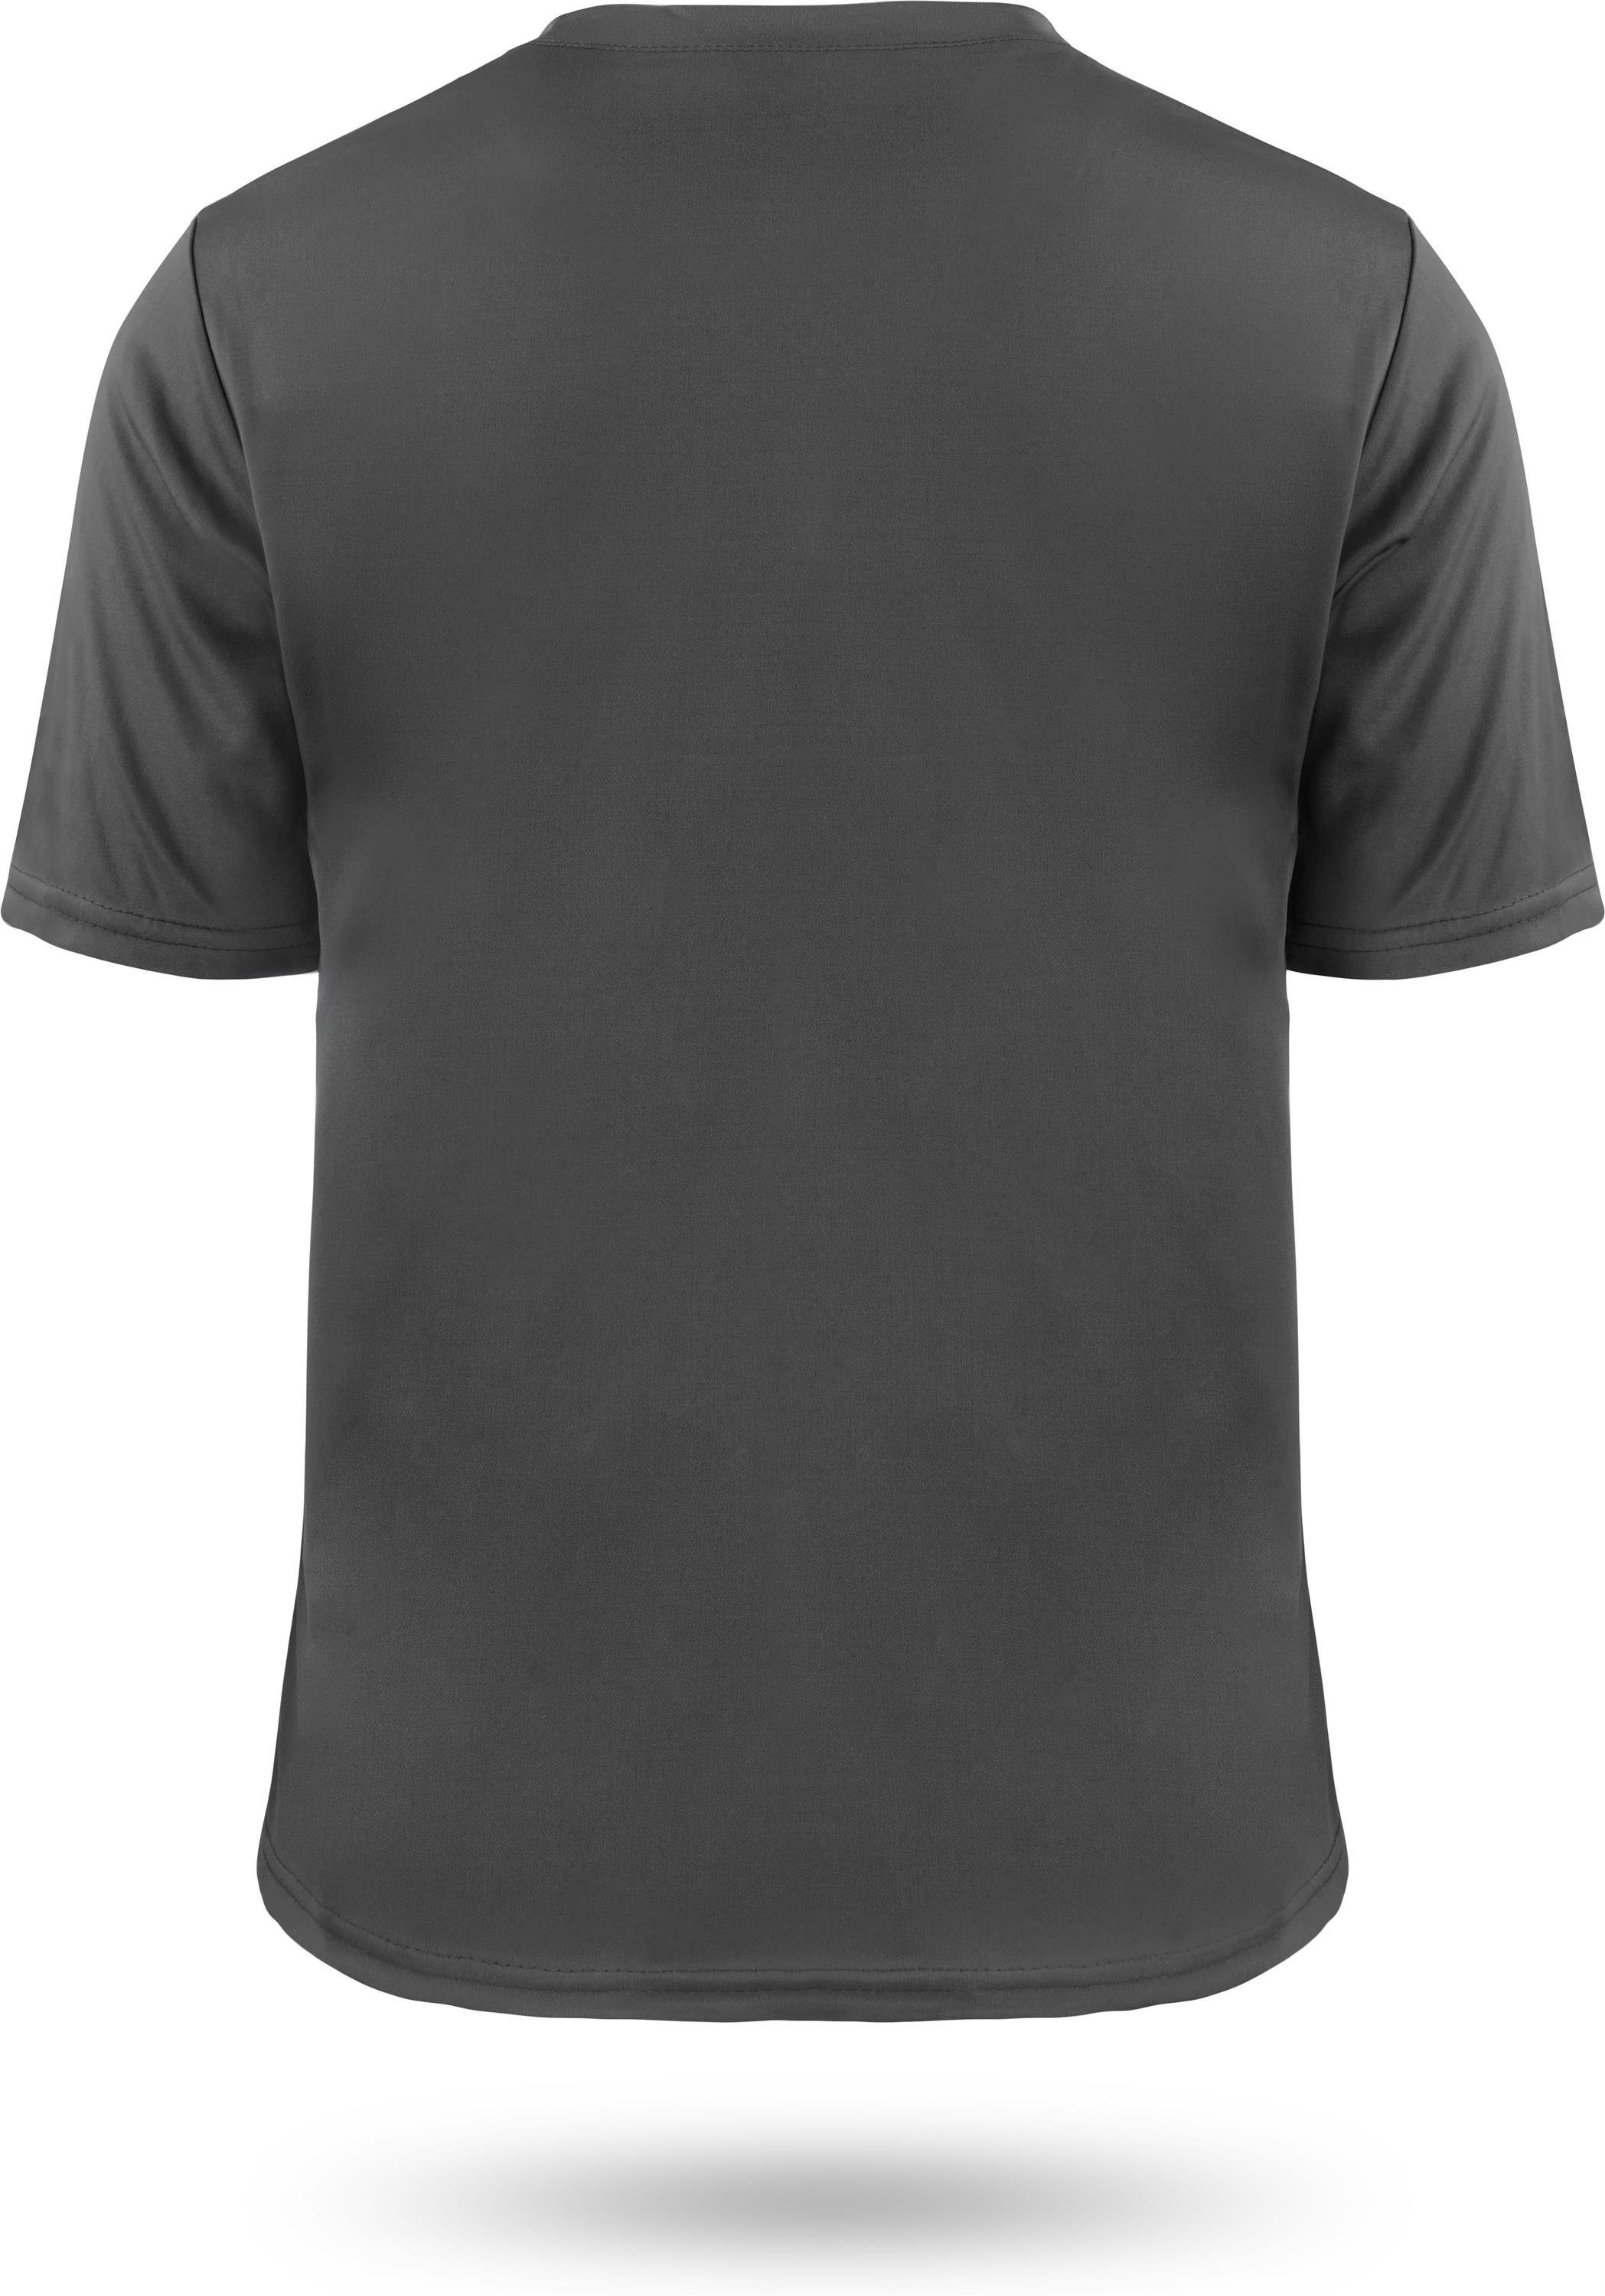 Cooling-Material Funktionsshirt Agra mt Grau Sportswear normani Fitness Herren Kurzarm Shirt T-Shirt Funktions-Sport